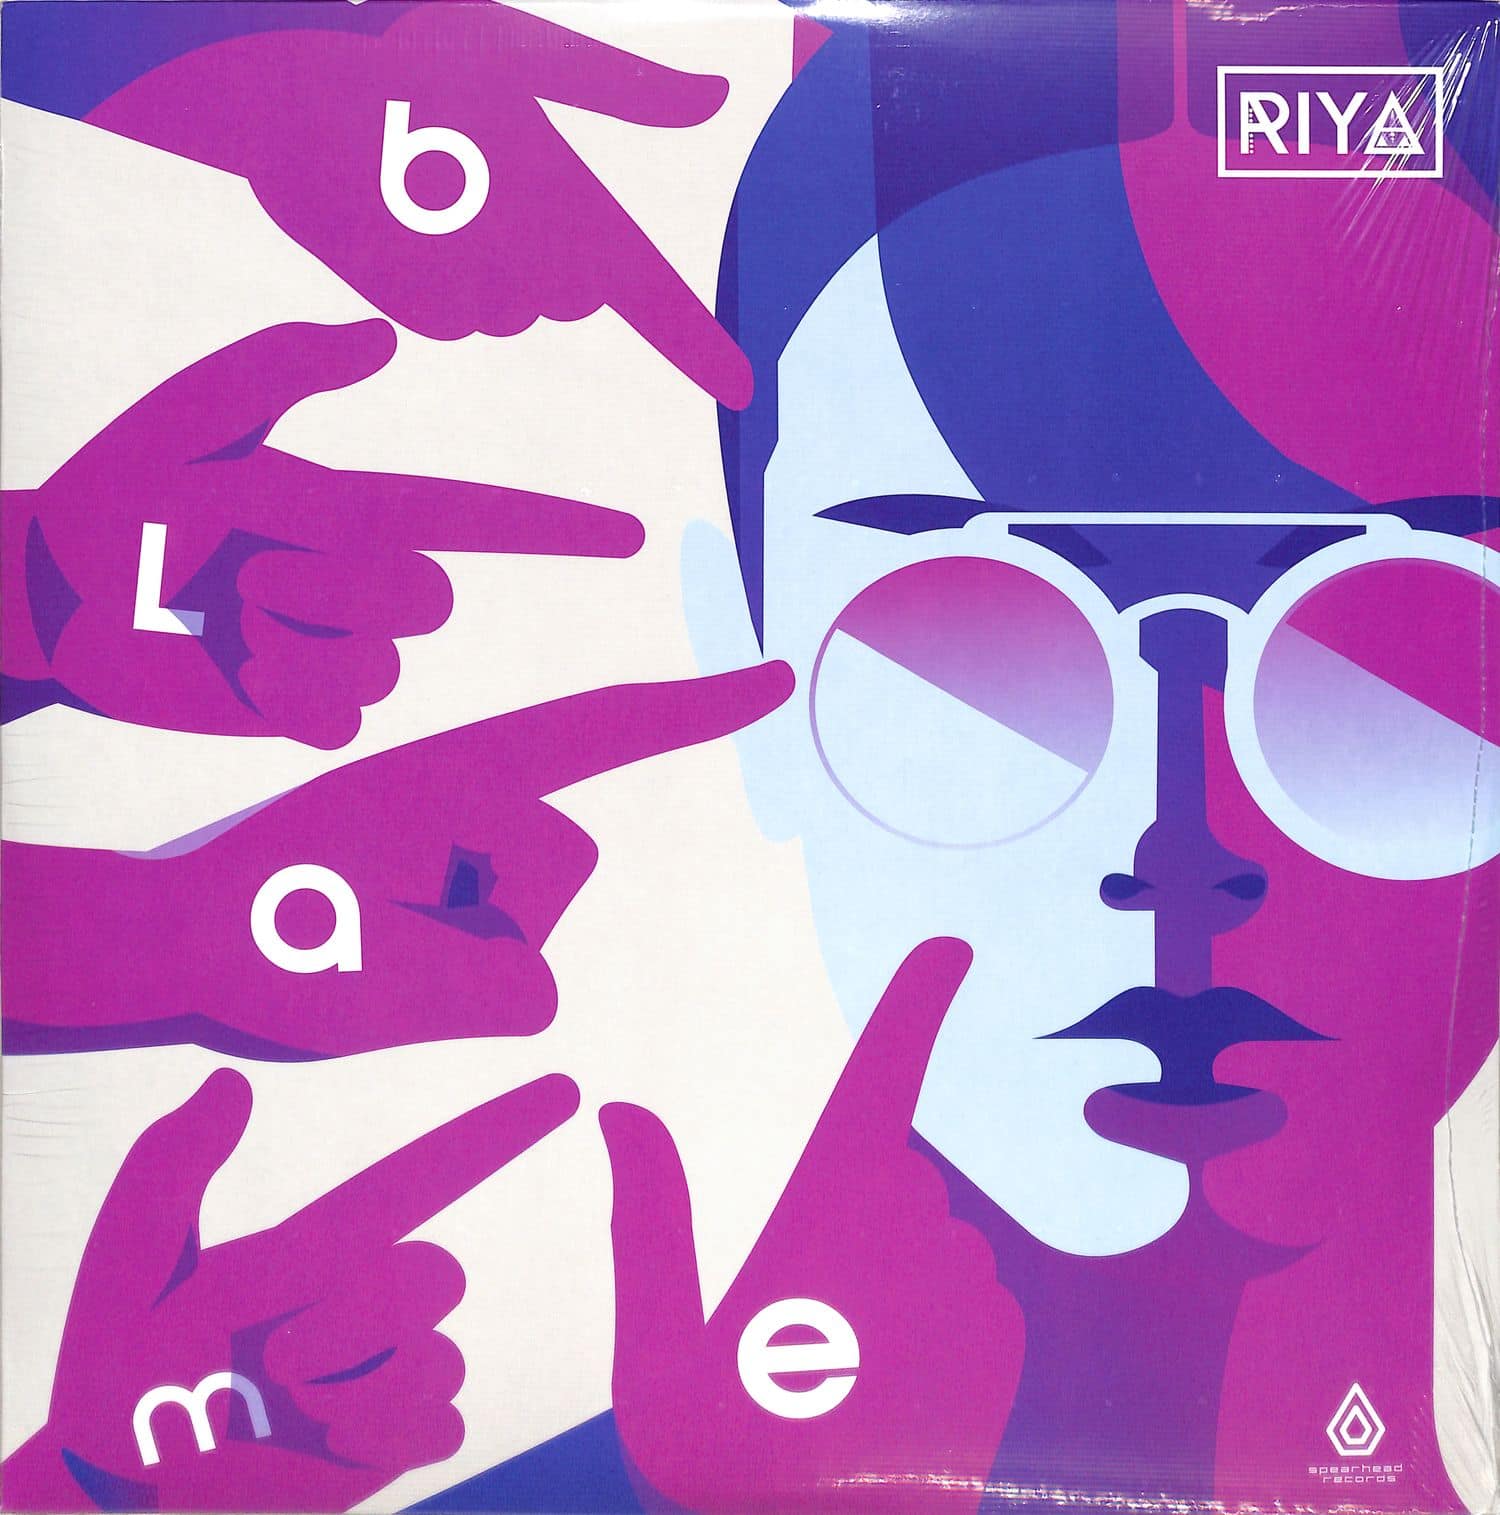 Riya - BLAME EP